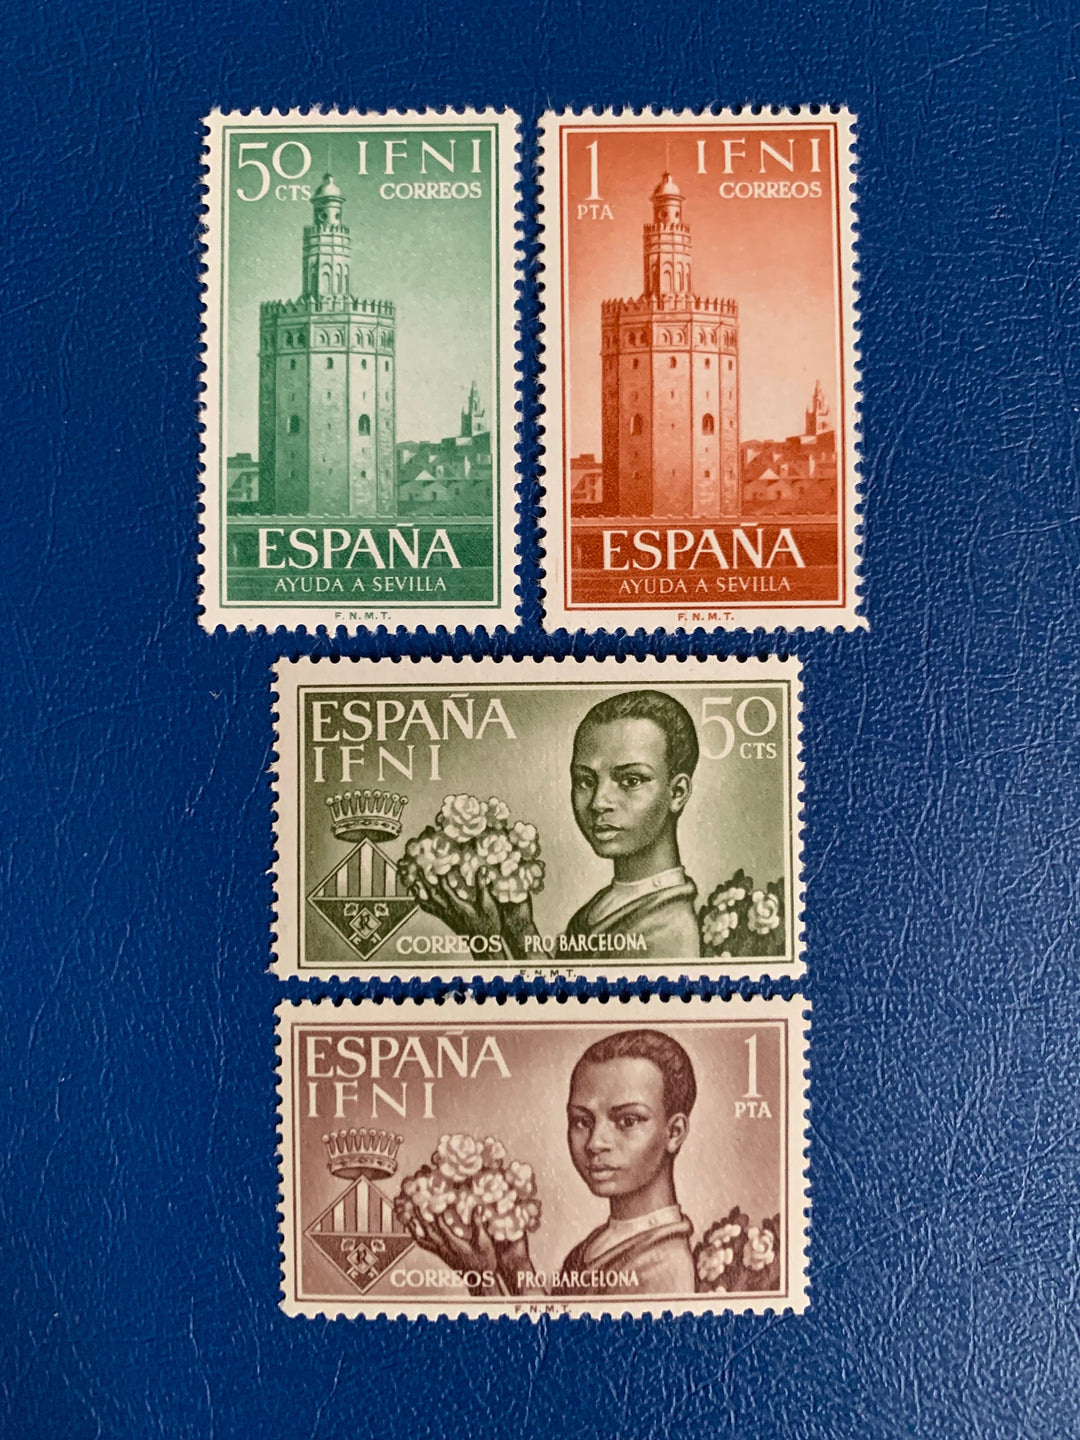 Sp. Ifni- Original Vintage Postage Stamps- 1963 - Aid to Sevilla & Barcelona